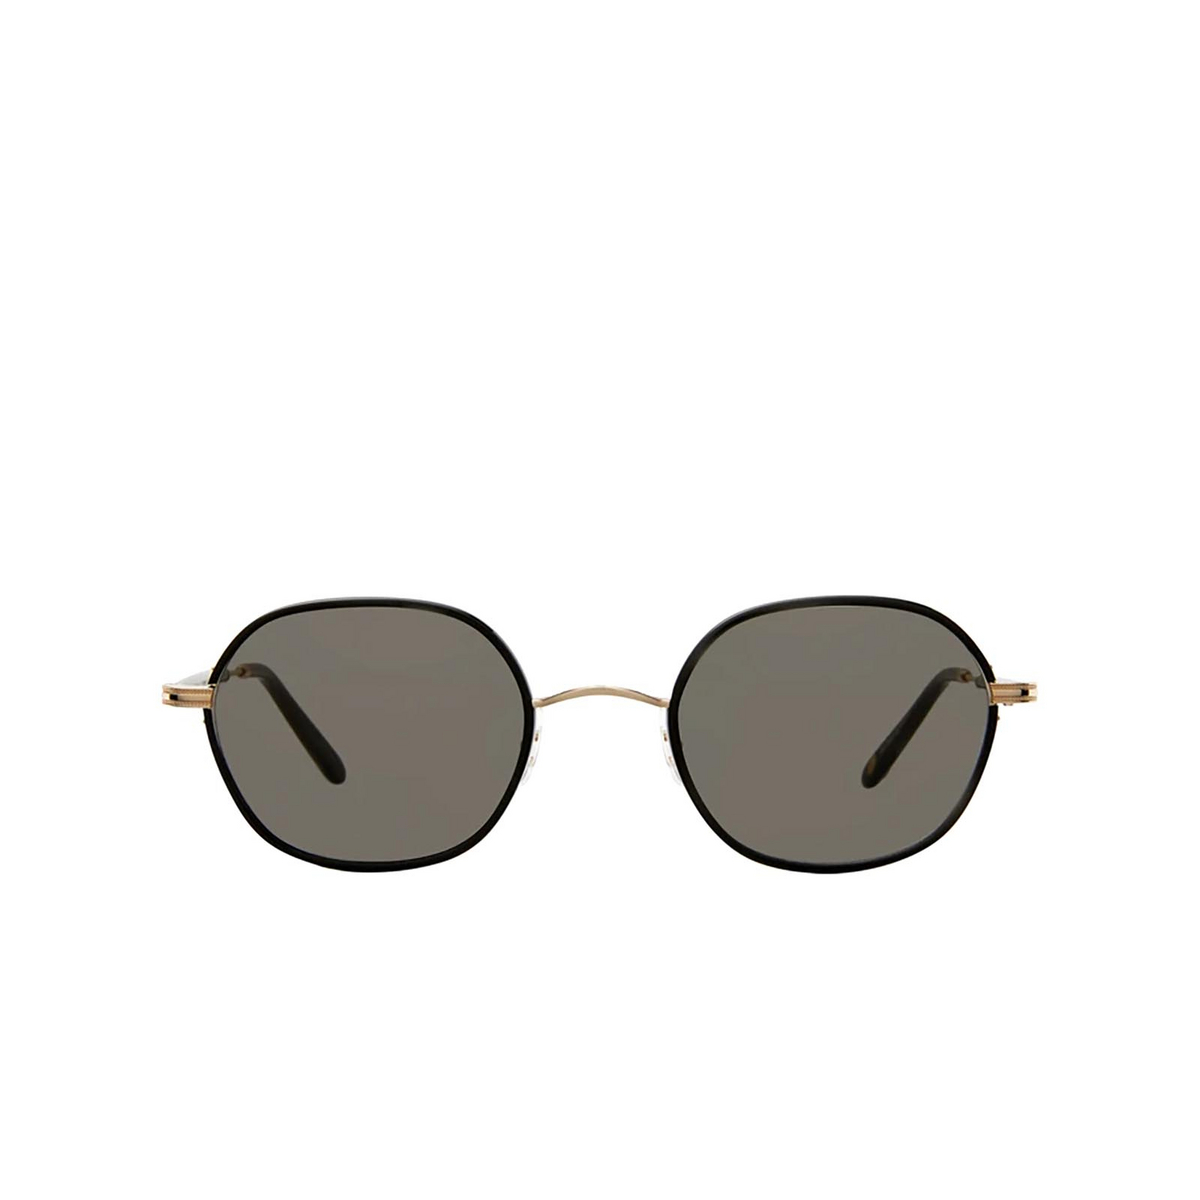 Garrett Leight® Irregular Sunglasses: Norfolk Sun color Bk-g/gry Black-gold - front view